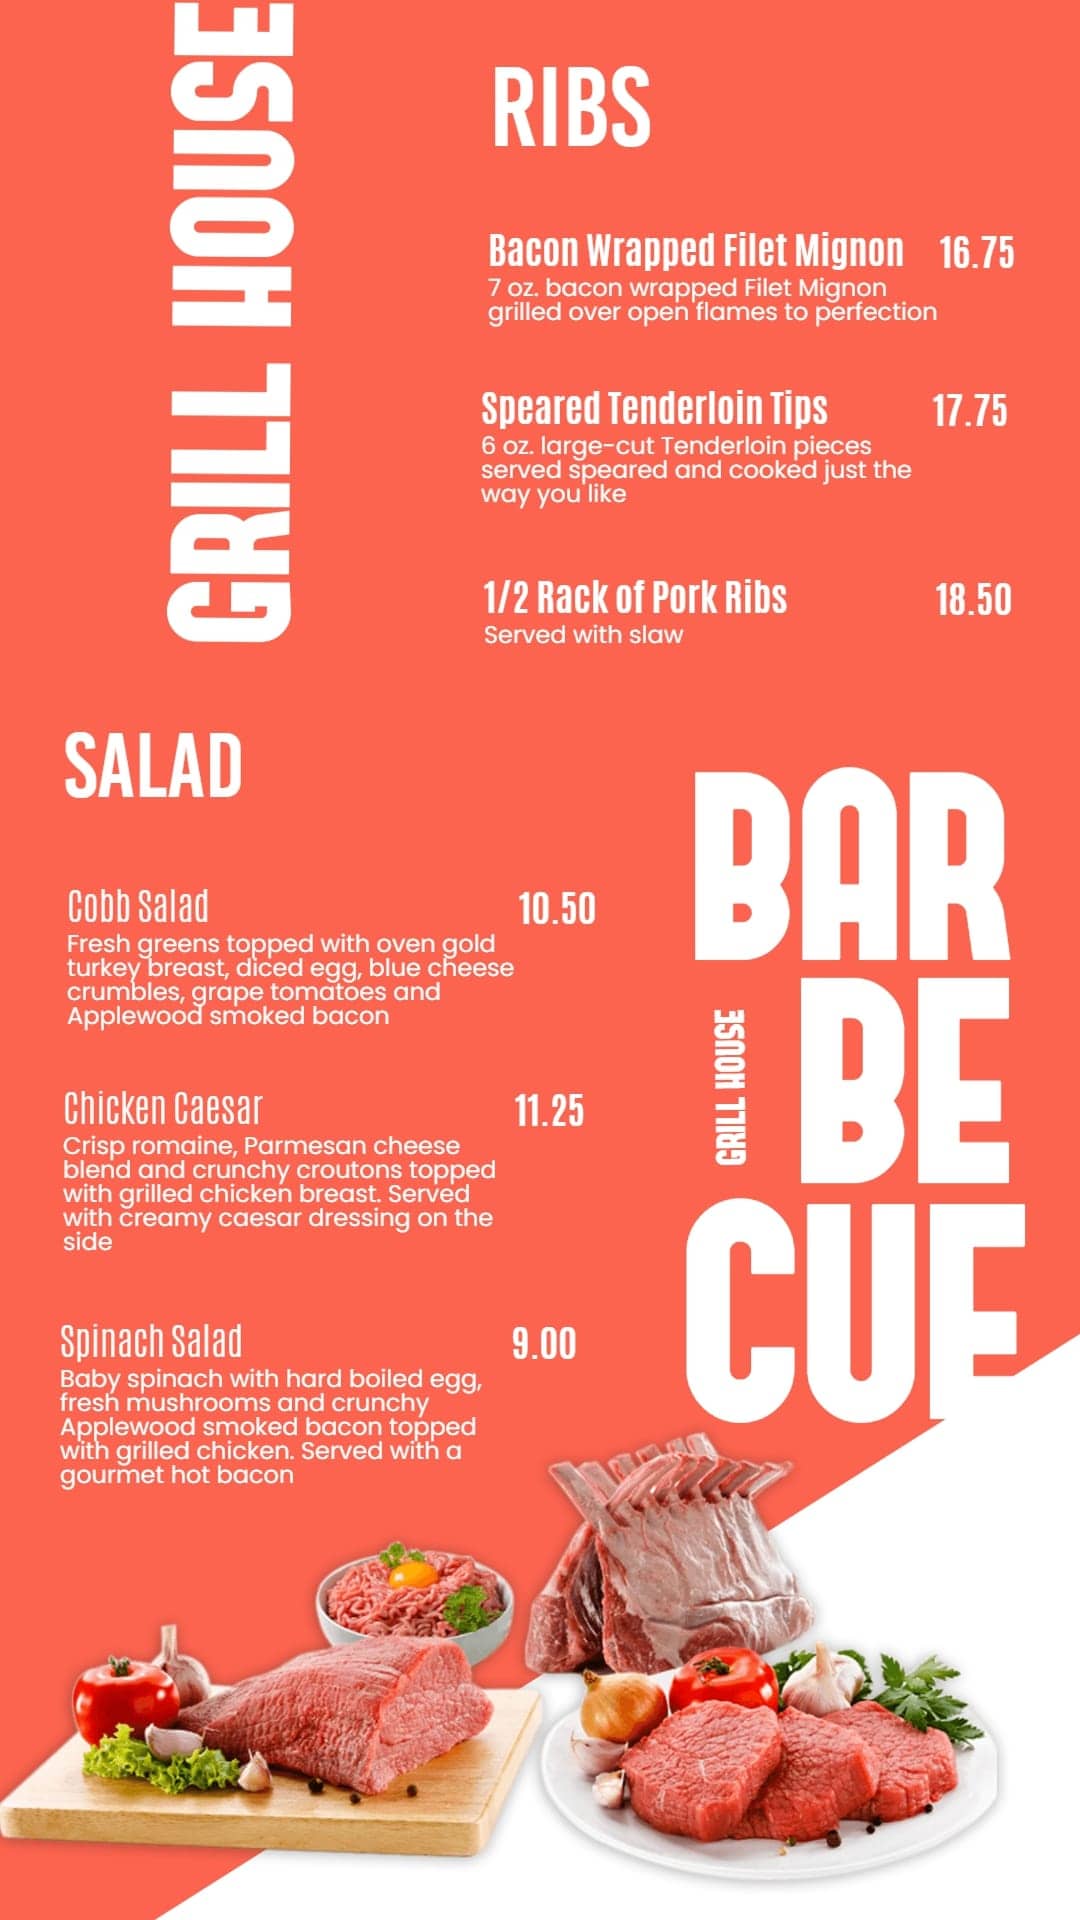 barbecue grill restaurant menu design